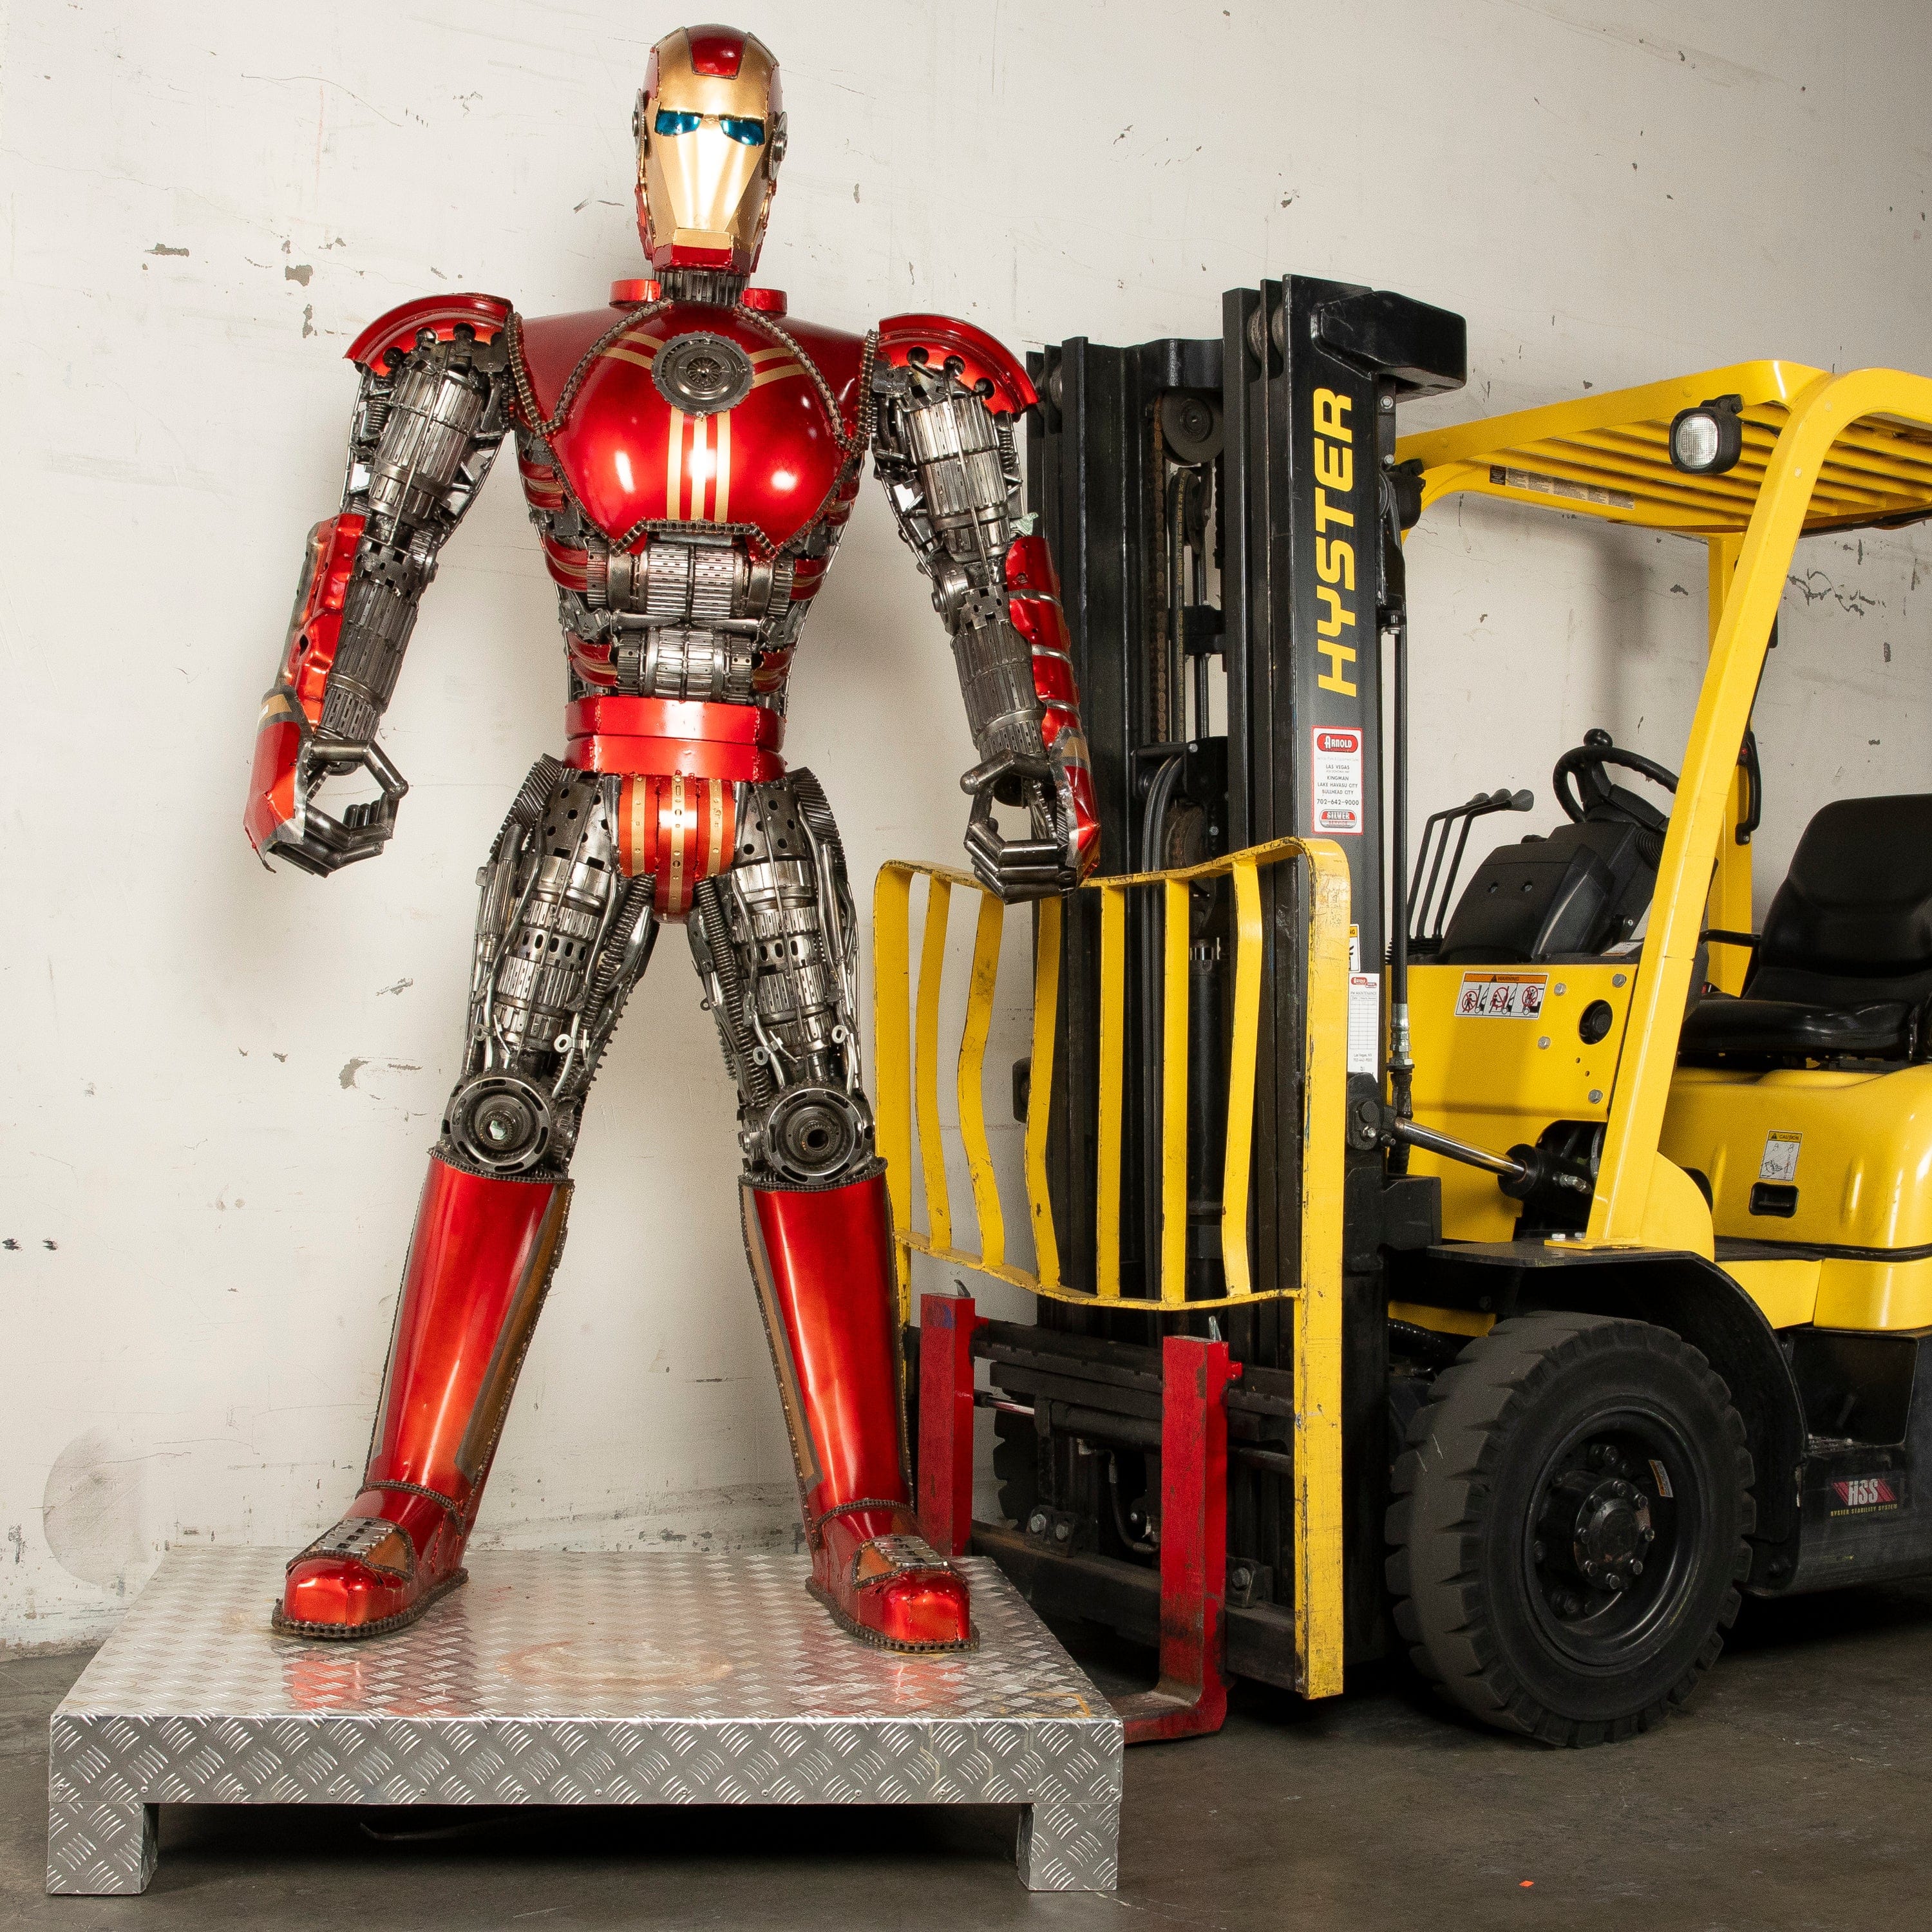 Kalifano Recycled Metal Art 79" Iron Man Inspired Recycled Metal Art Sculpture RMS-IMR200-S07